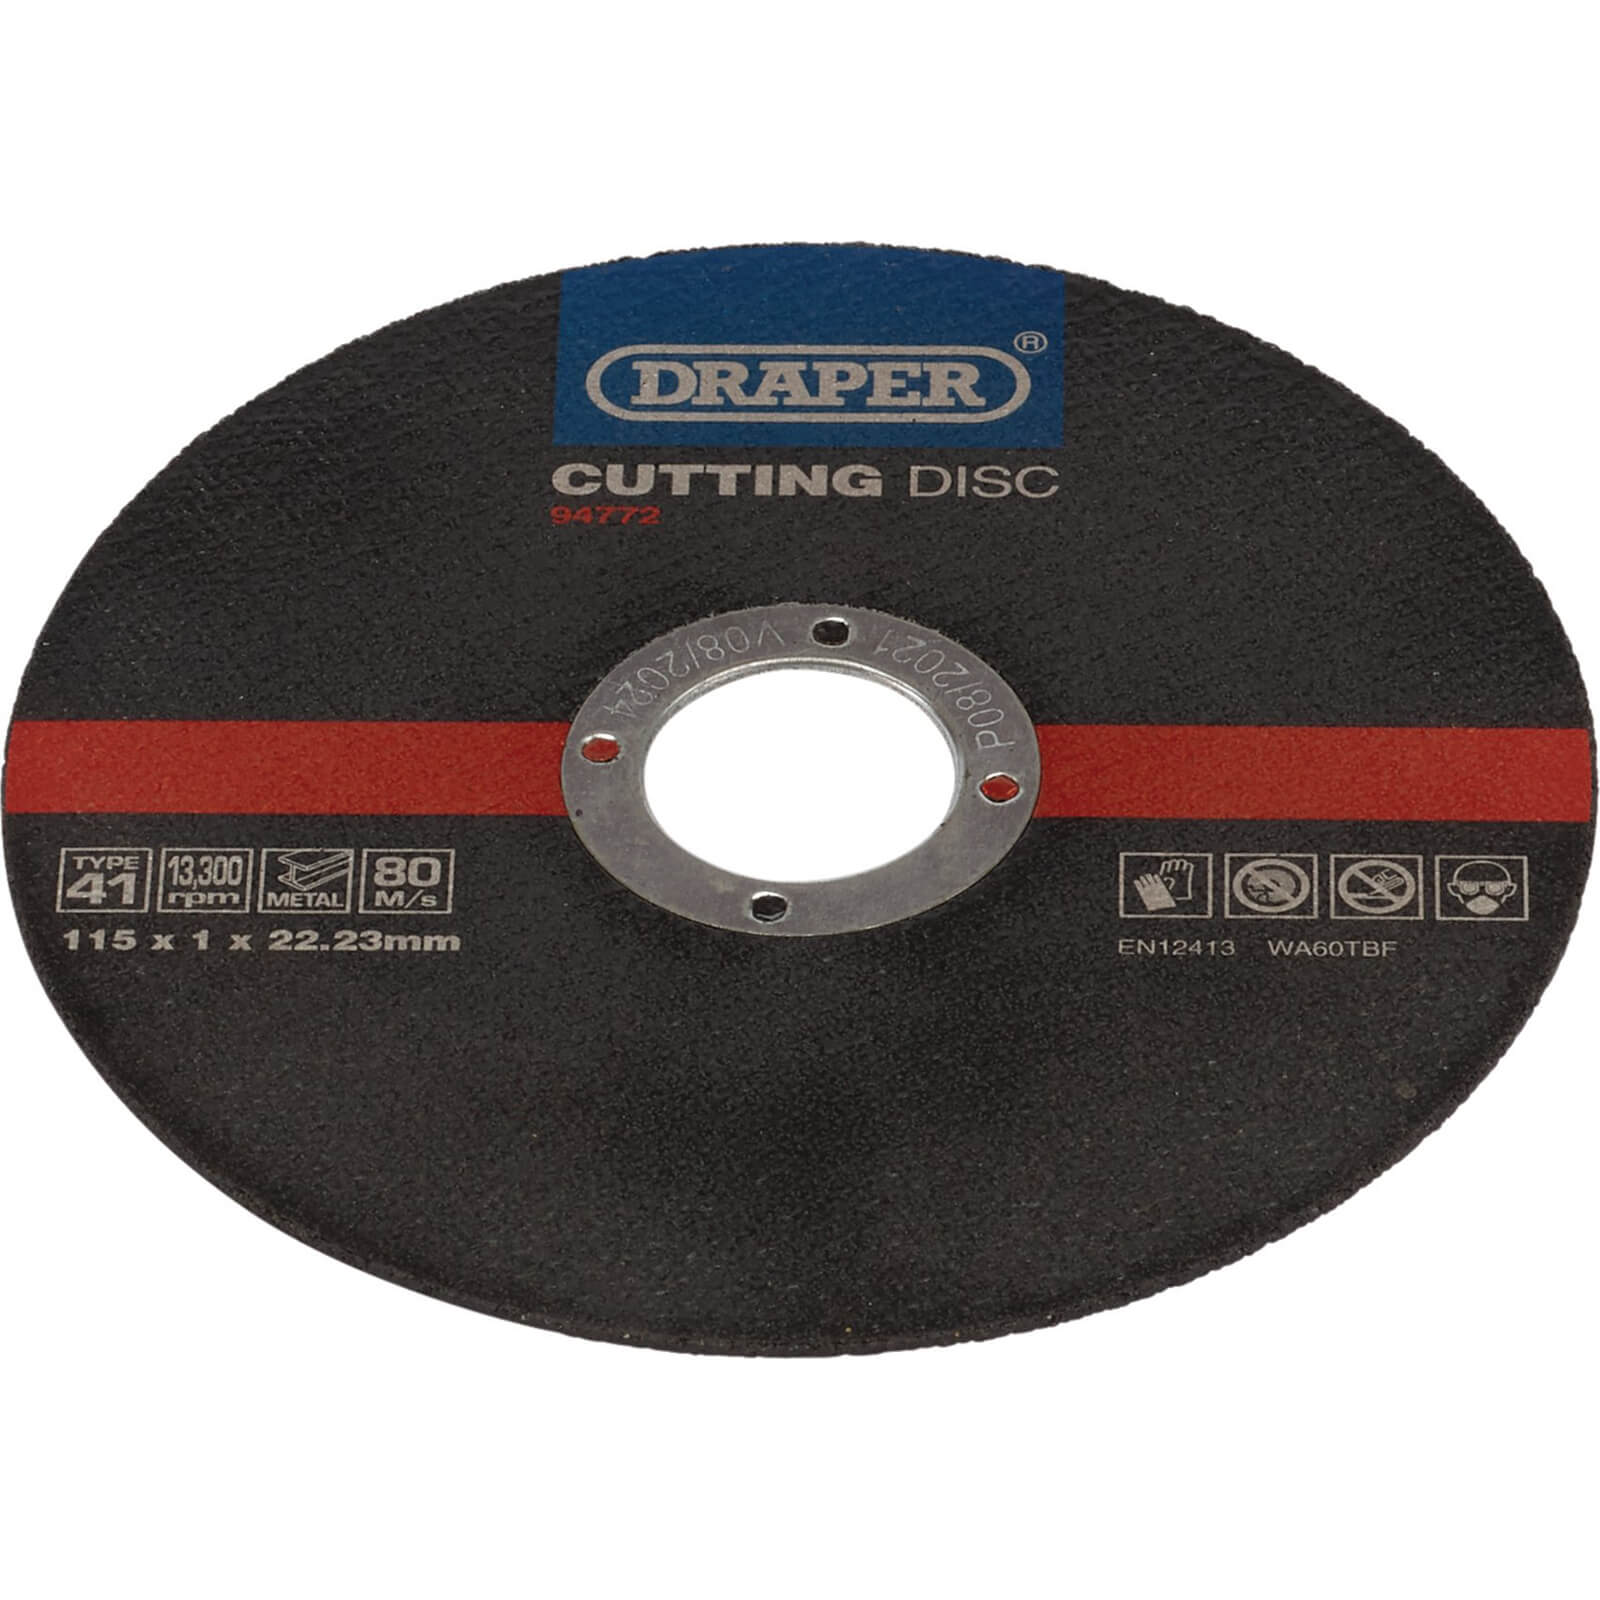 Draper Metal Cutting Discs Pack of 100 115mm 1mm 22mm